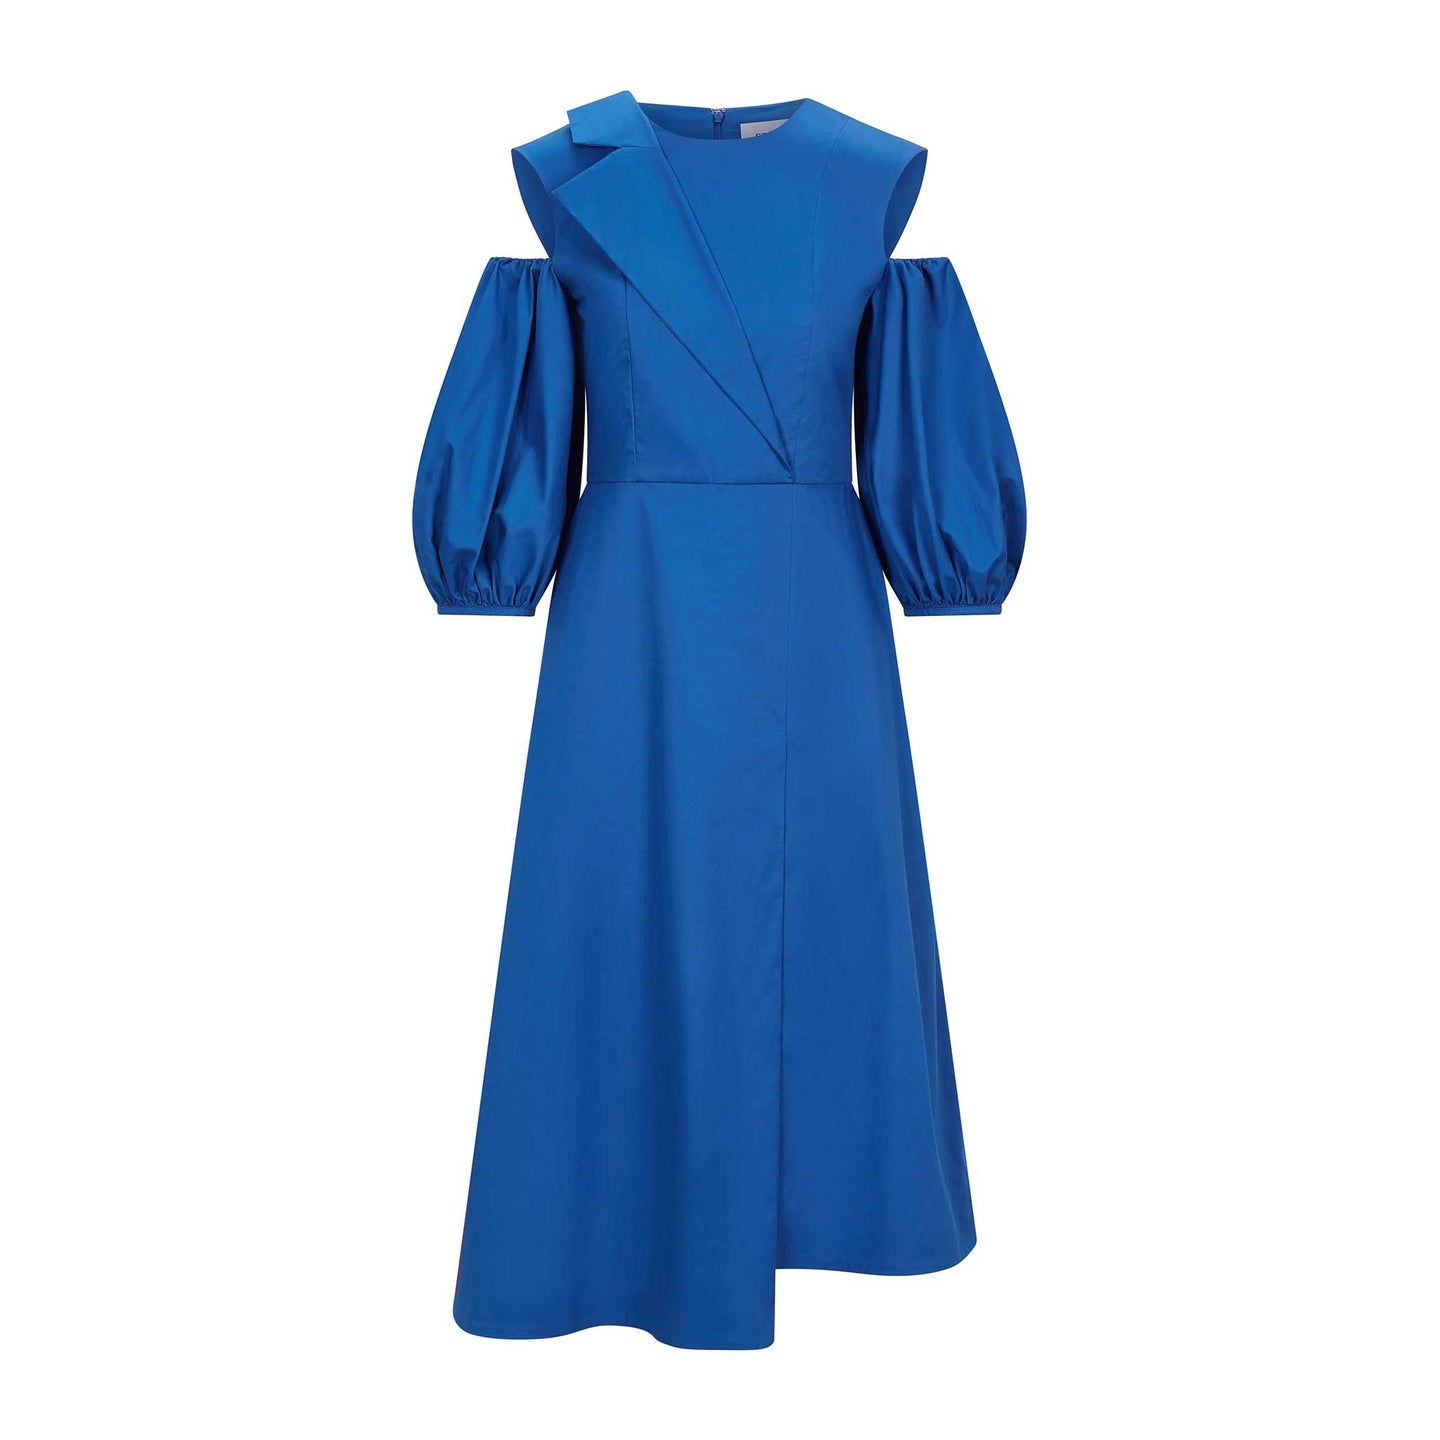 Asymmetric A-line blue cotton dress